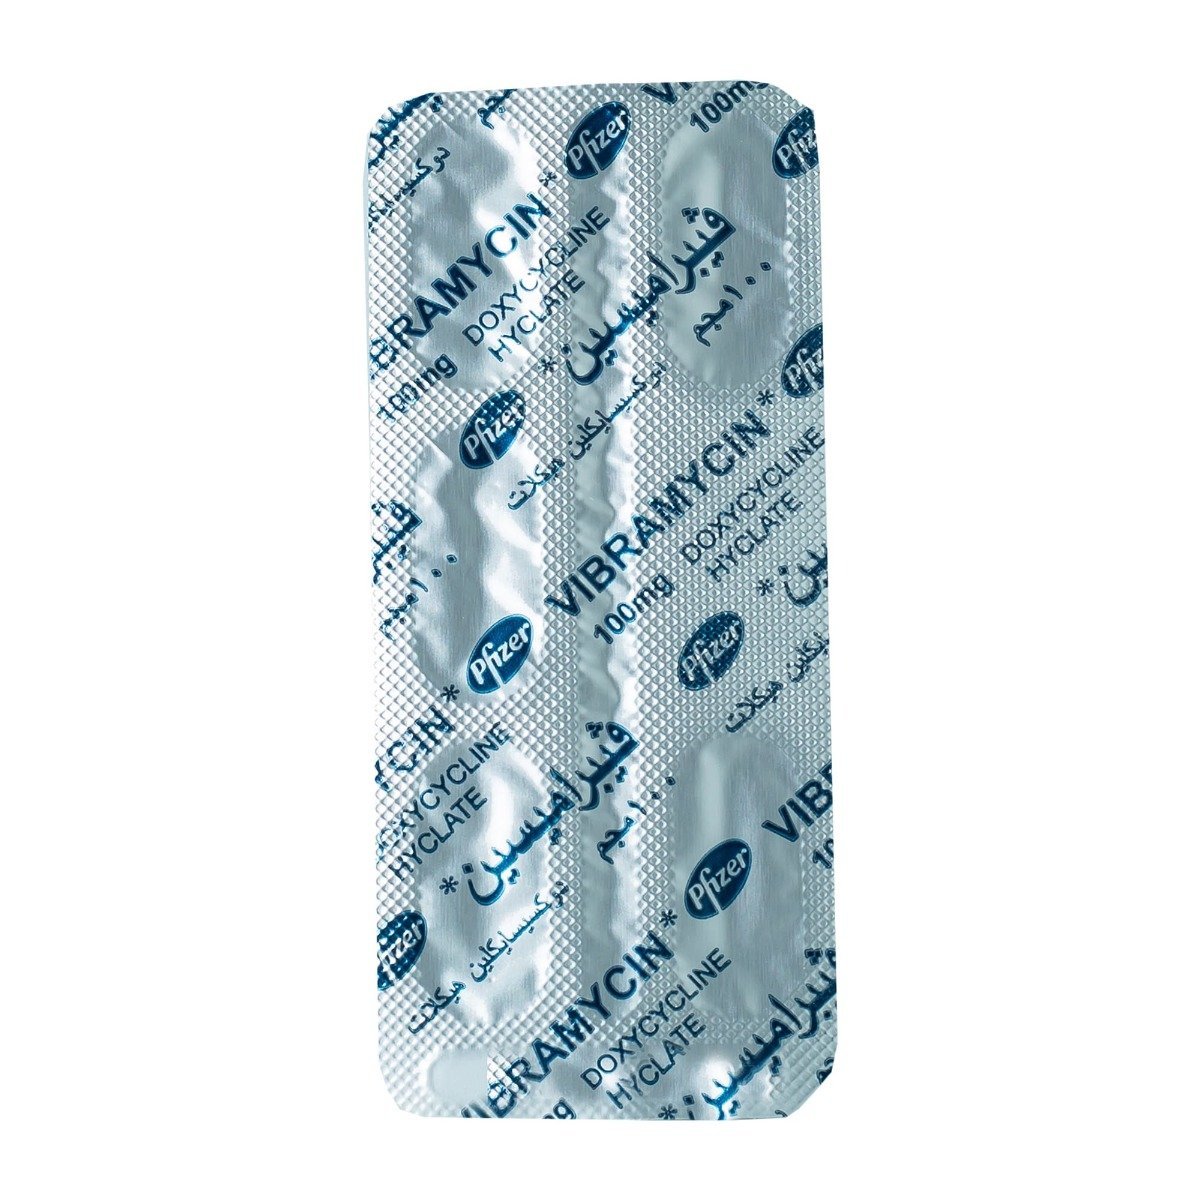 Vibramycin 100 mg - 10 Capsules - Bloom Pharmacy